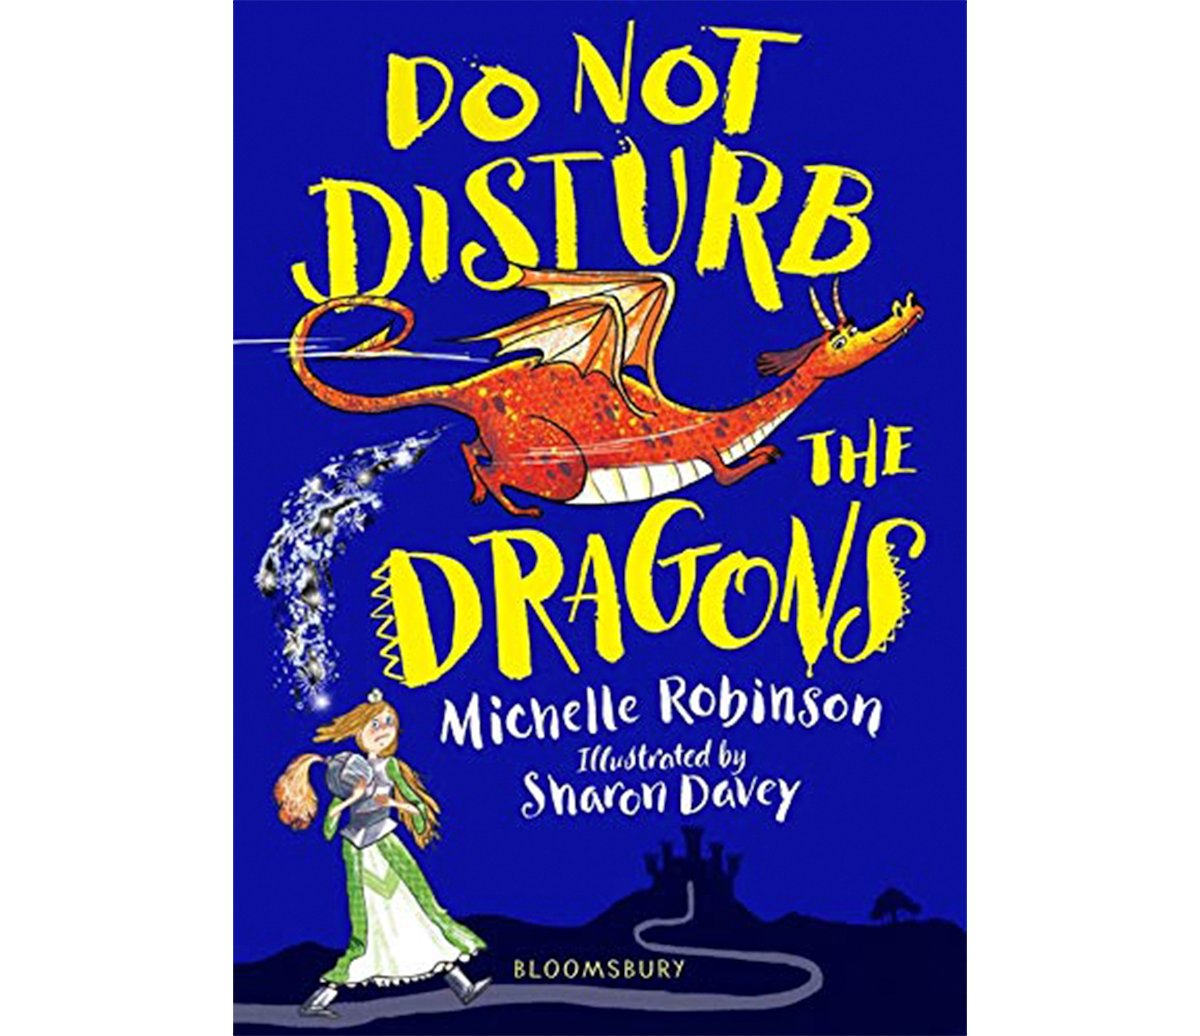 sharon-davey-do-not-disturb-dragons-cover.jpg